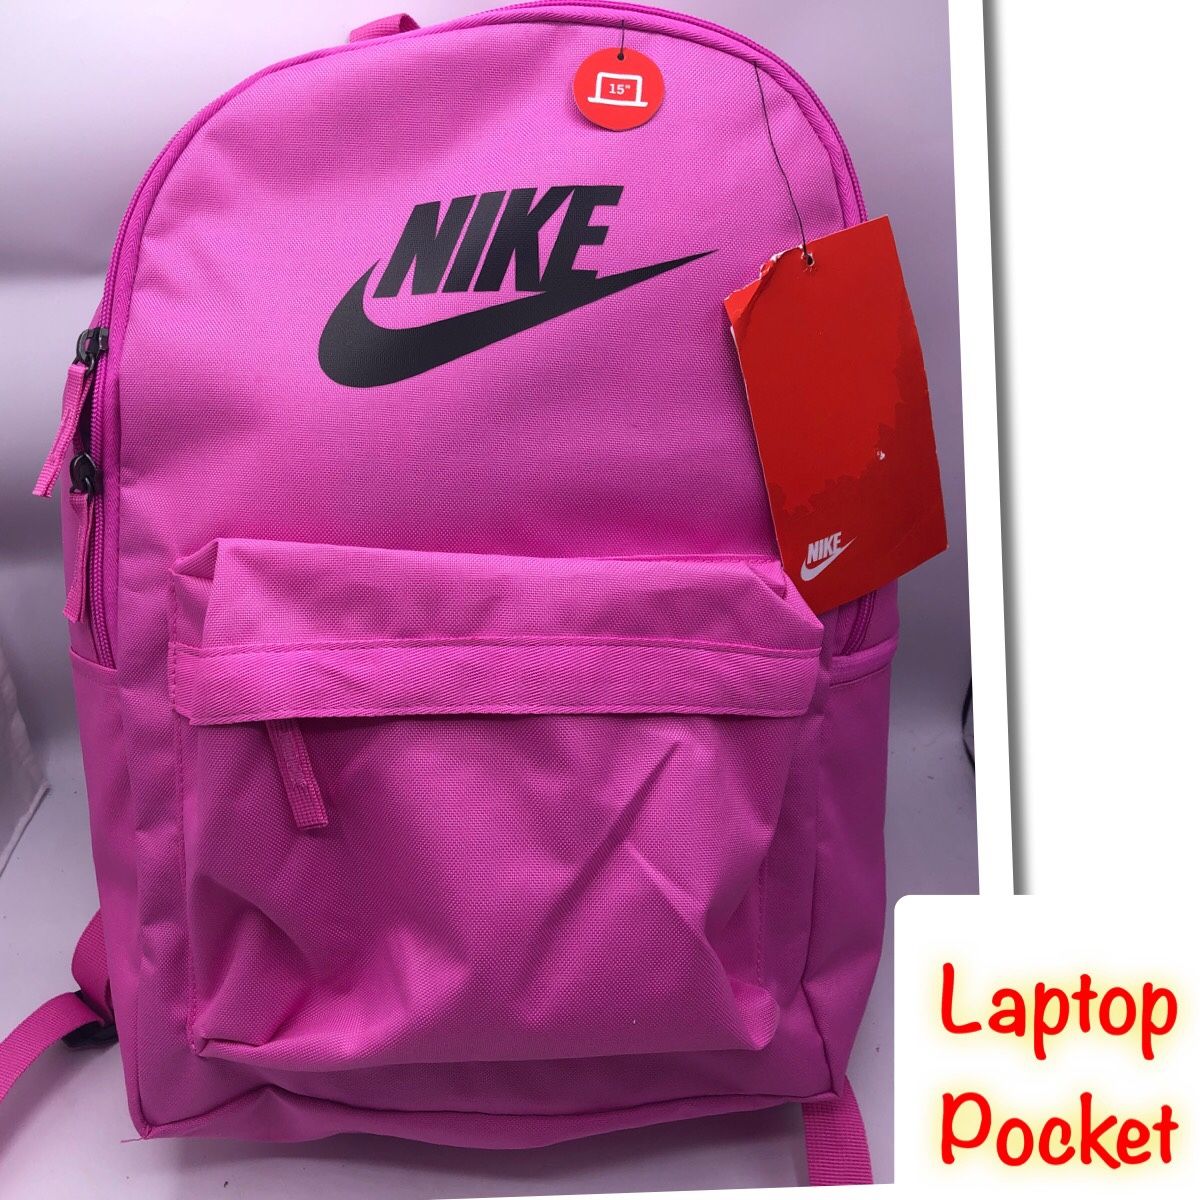 Nike Large Laptop Pocket Backpack